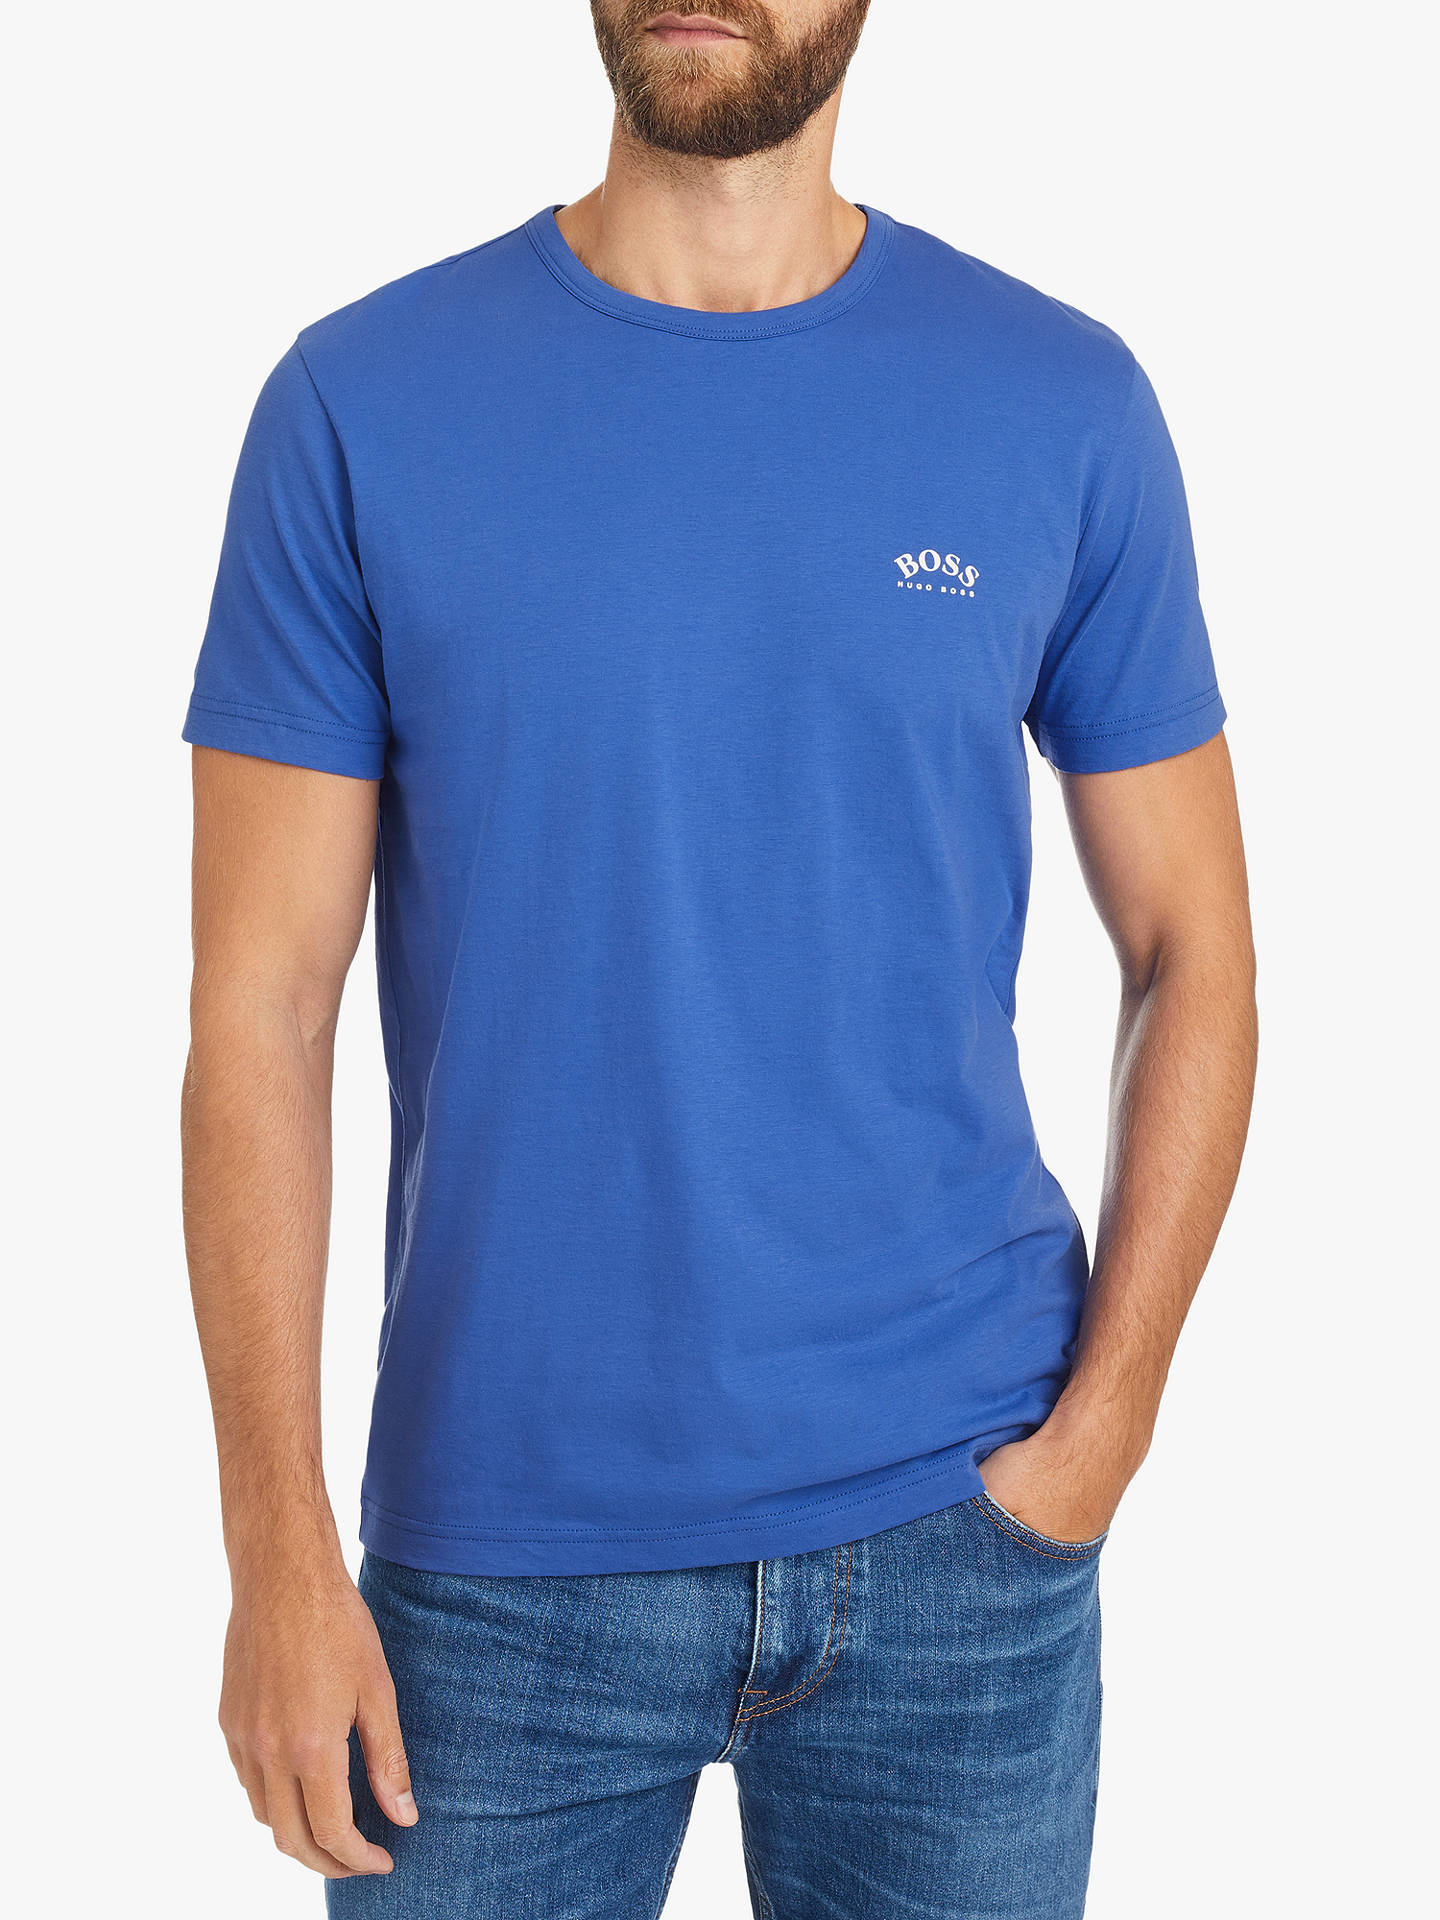 BOSS Curved Logo T-Shirt, Blue at John Lewis & Partners